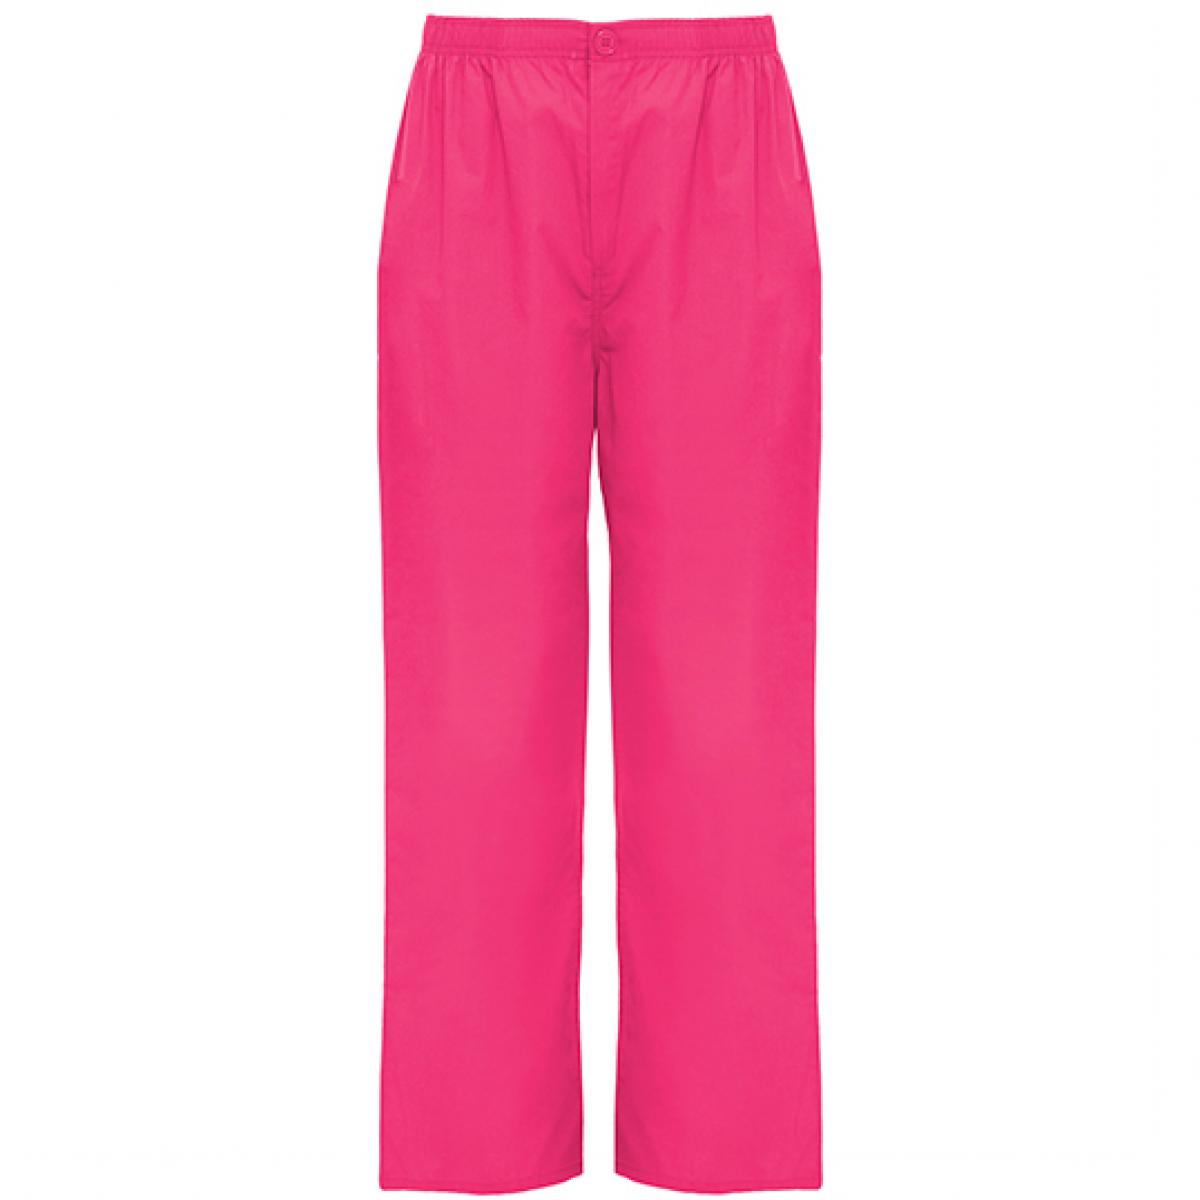 Hersteller: Roly Workwear Herstellernummer: PA9097 Artikelbezeichnung: Vademecum Pull on trousers - Pfegerhose Farbe: Rosette 78